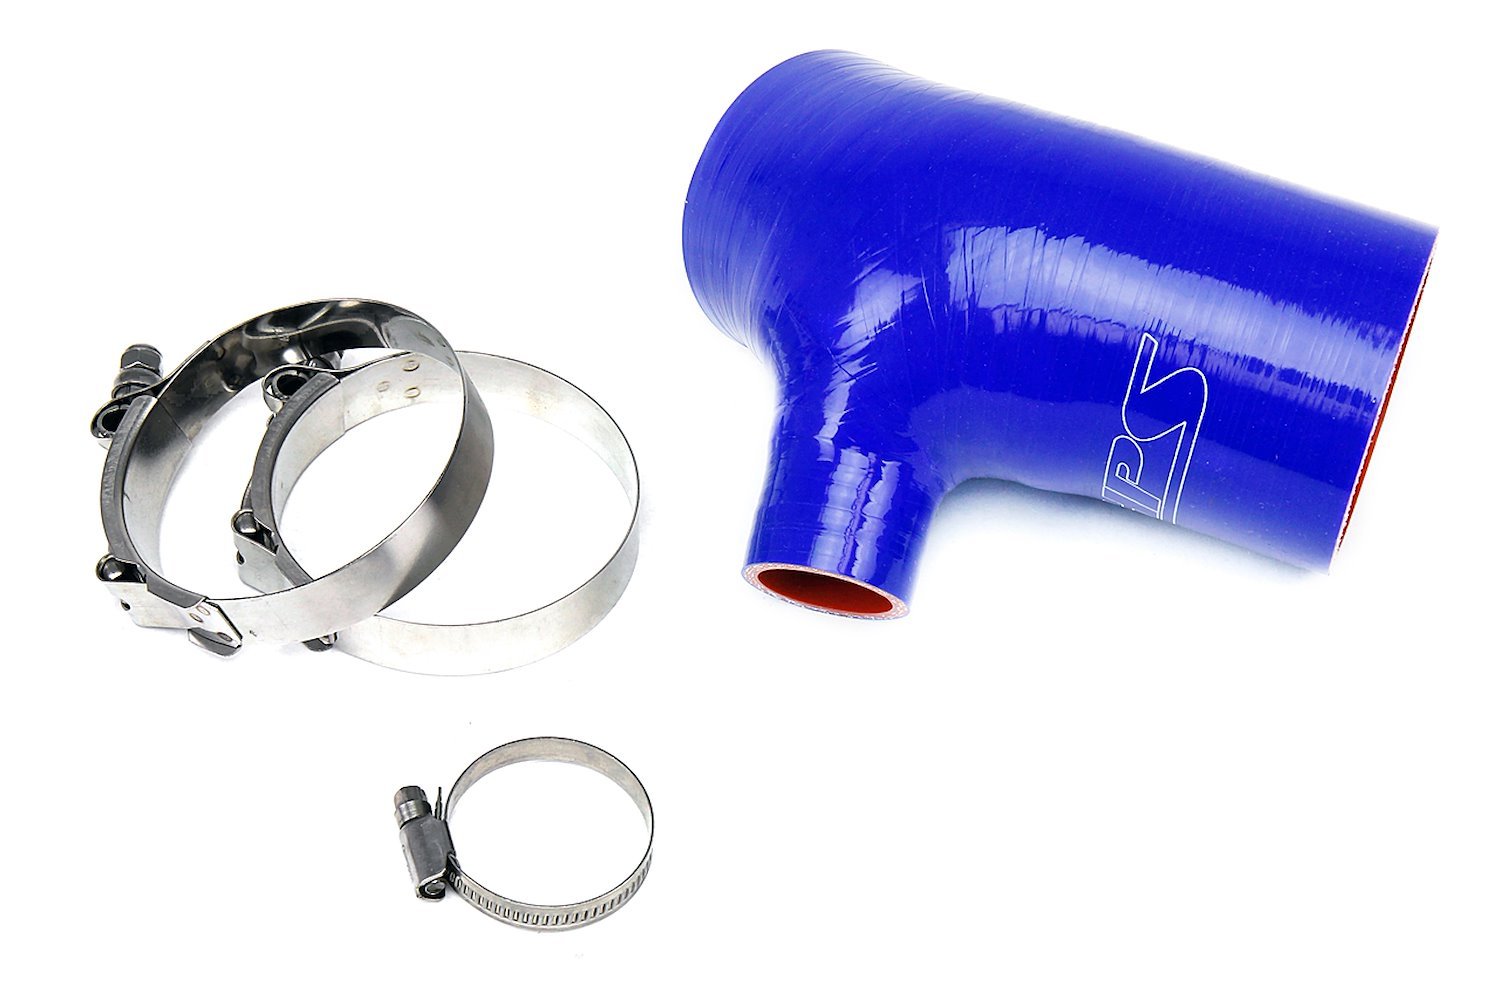 57-1544-BLUE Silicone Air Intake, Dyno Proven +4 HP, +4.1 TQ, High Air Flow, Better Throttle Response